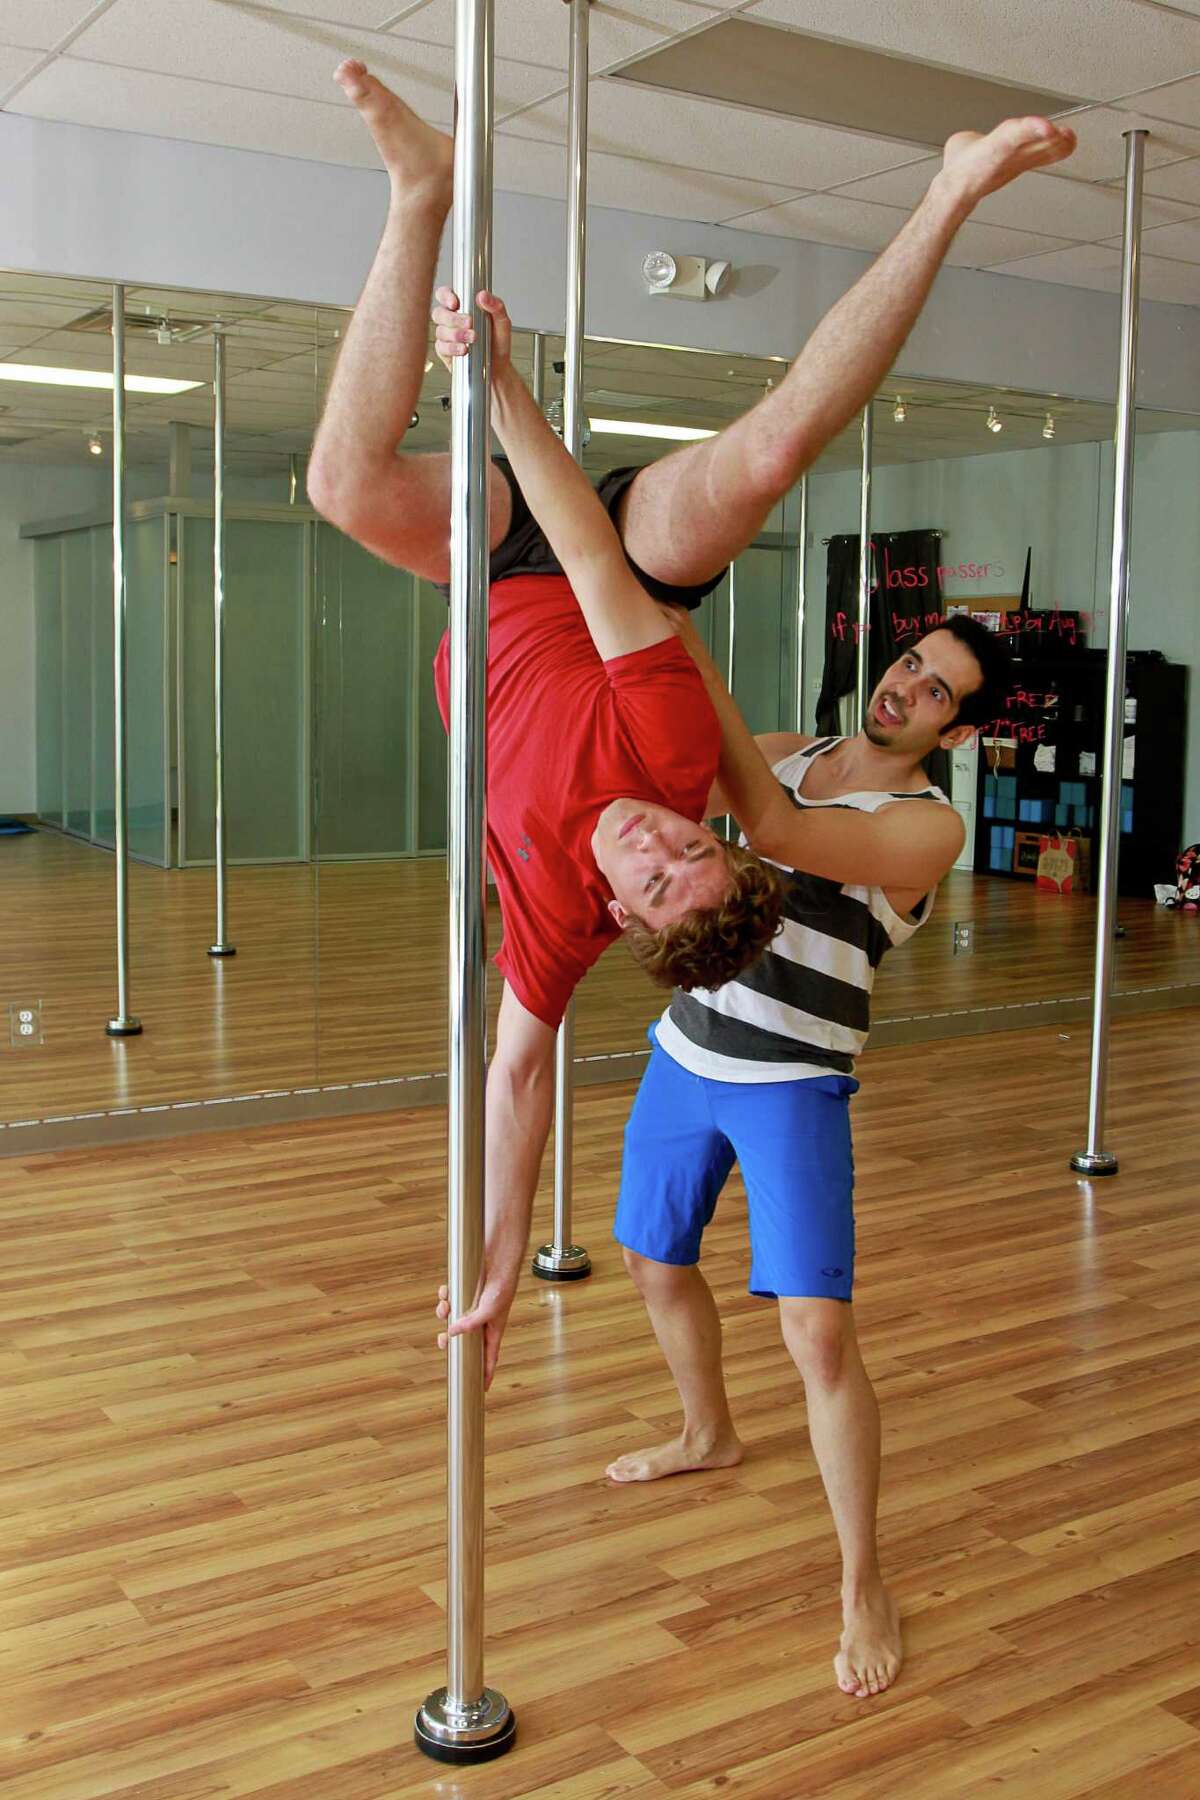 Men Seeking Workout Challenge Take Pole Dancing Class For A Spin